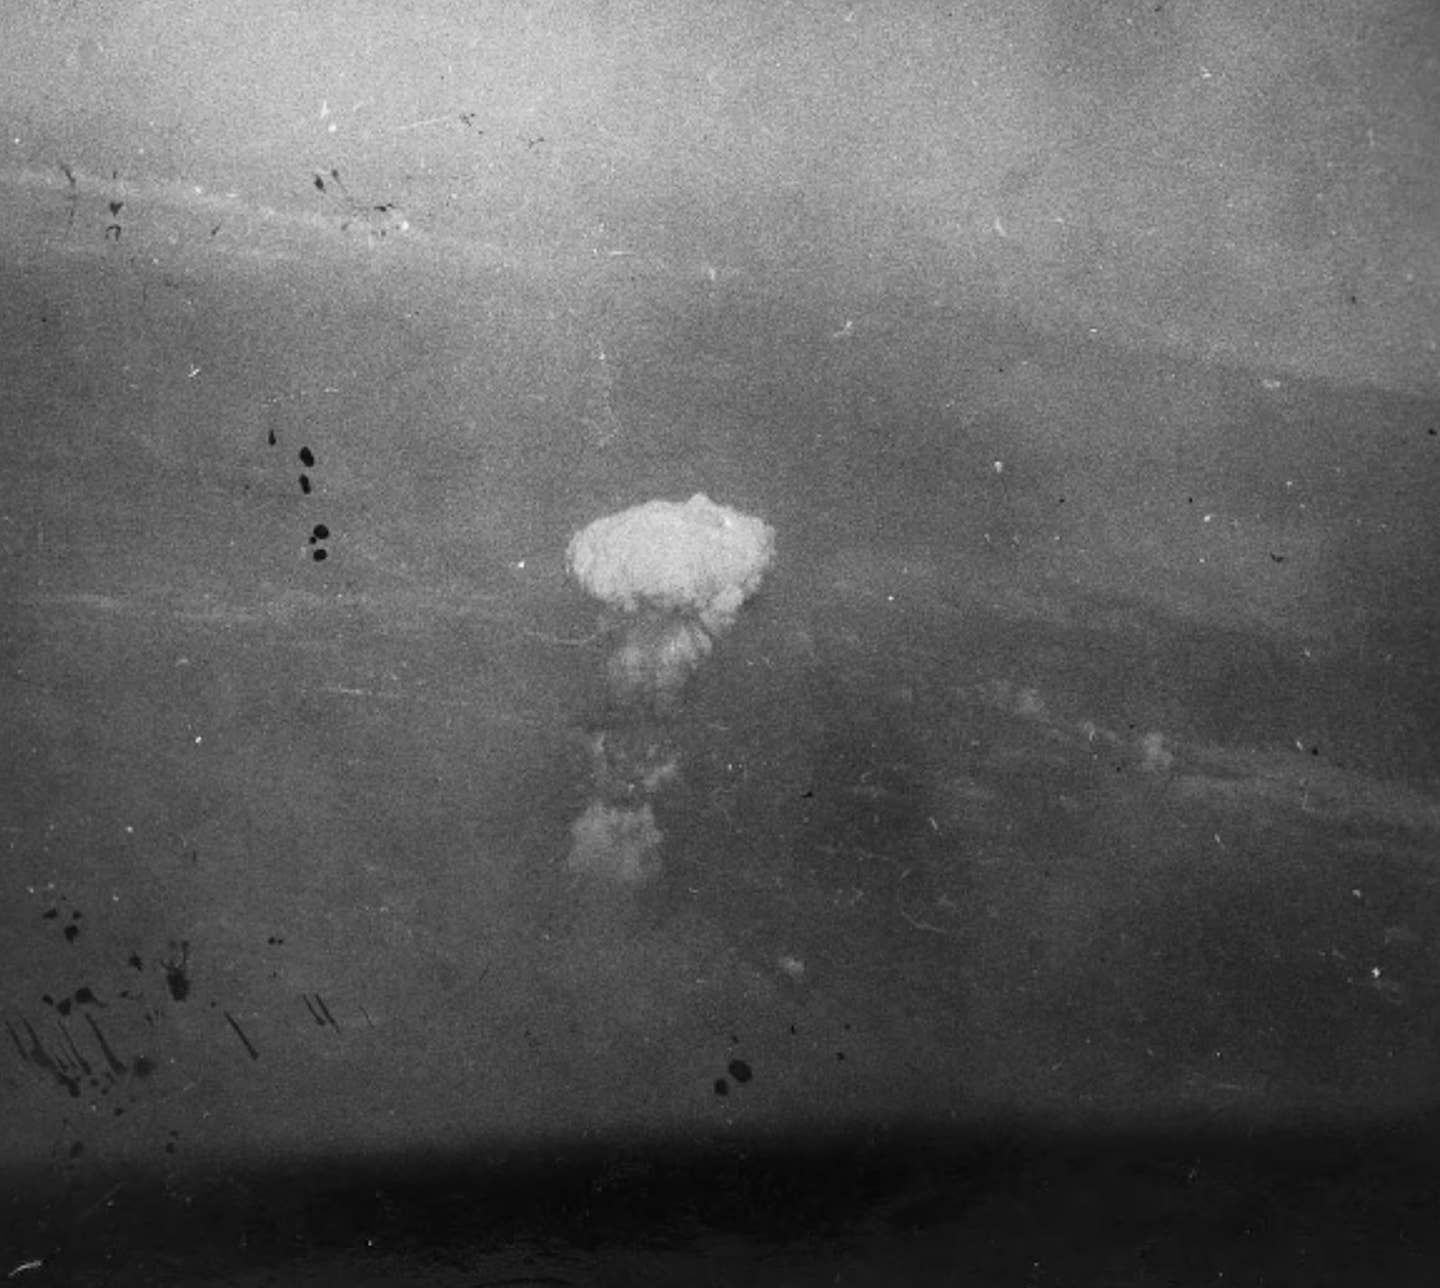 Gackenbach's picture of the Hiroshima mushroom cloud, released in 2014. <em>YouTube screen cap</em>